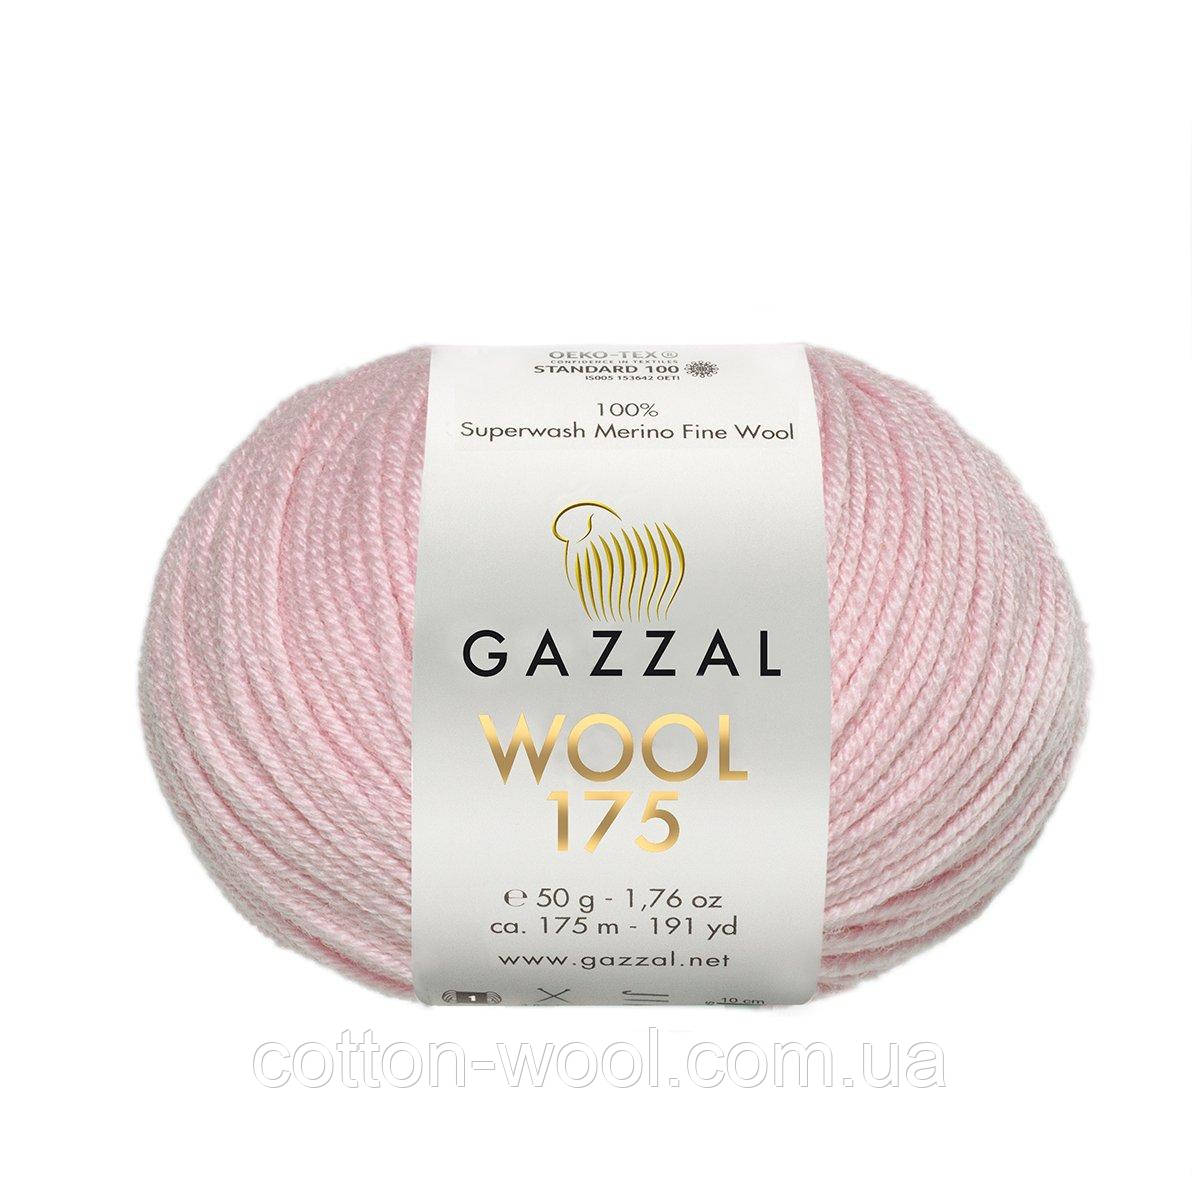 Gazzal Wool 175 (Газал Вул 175) 329